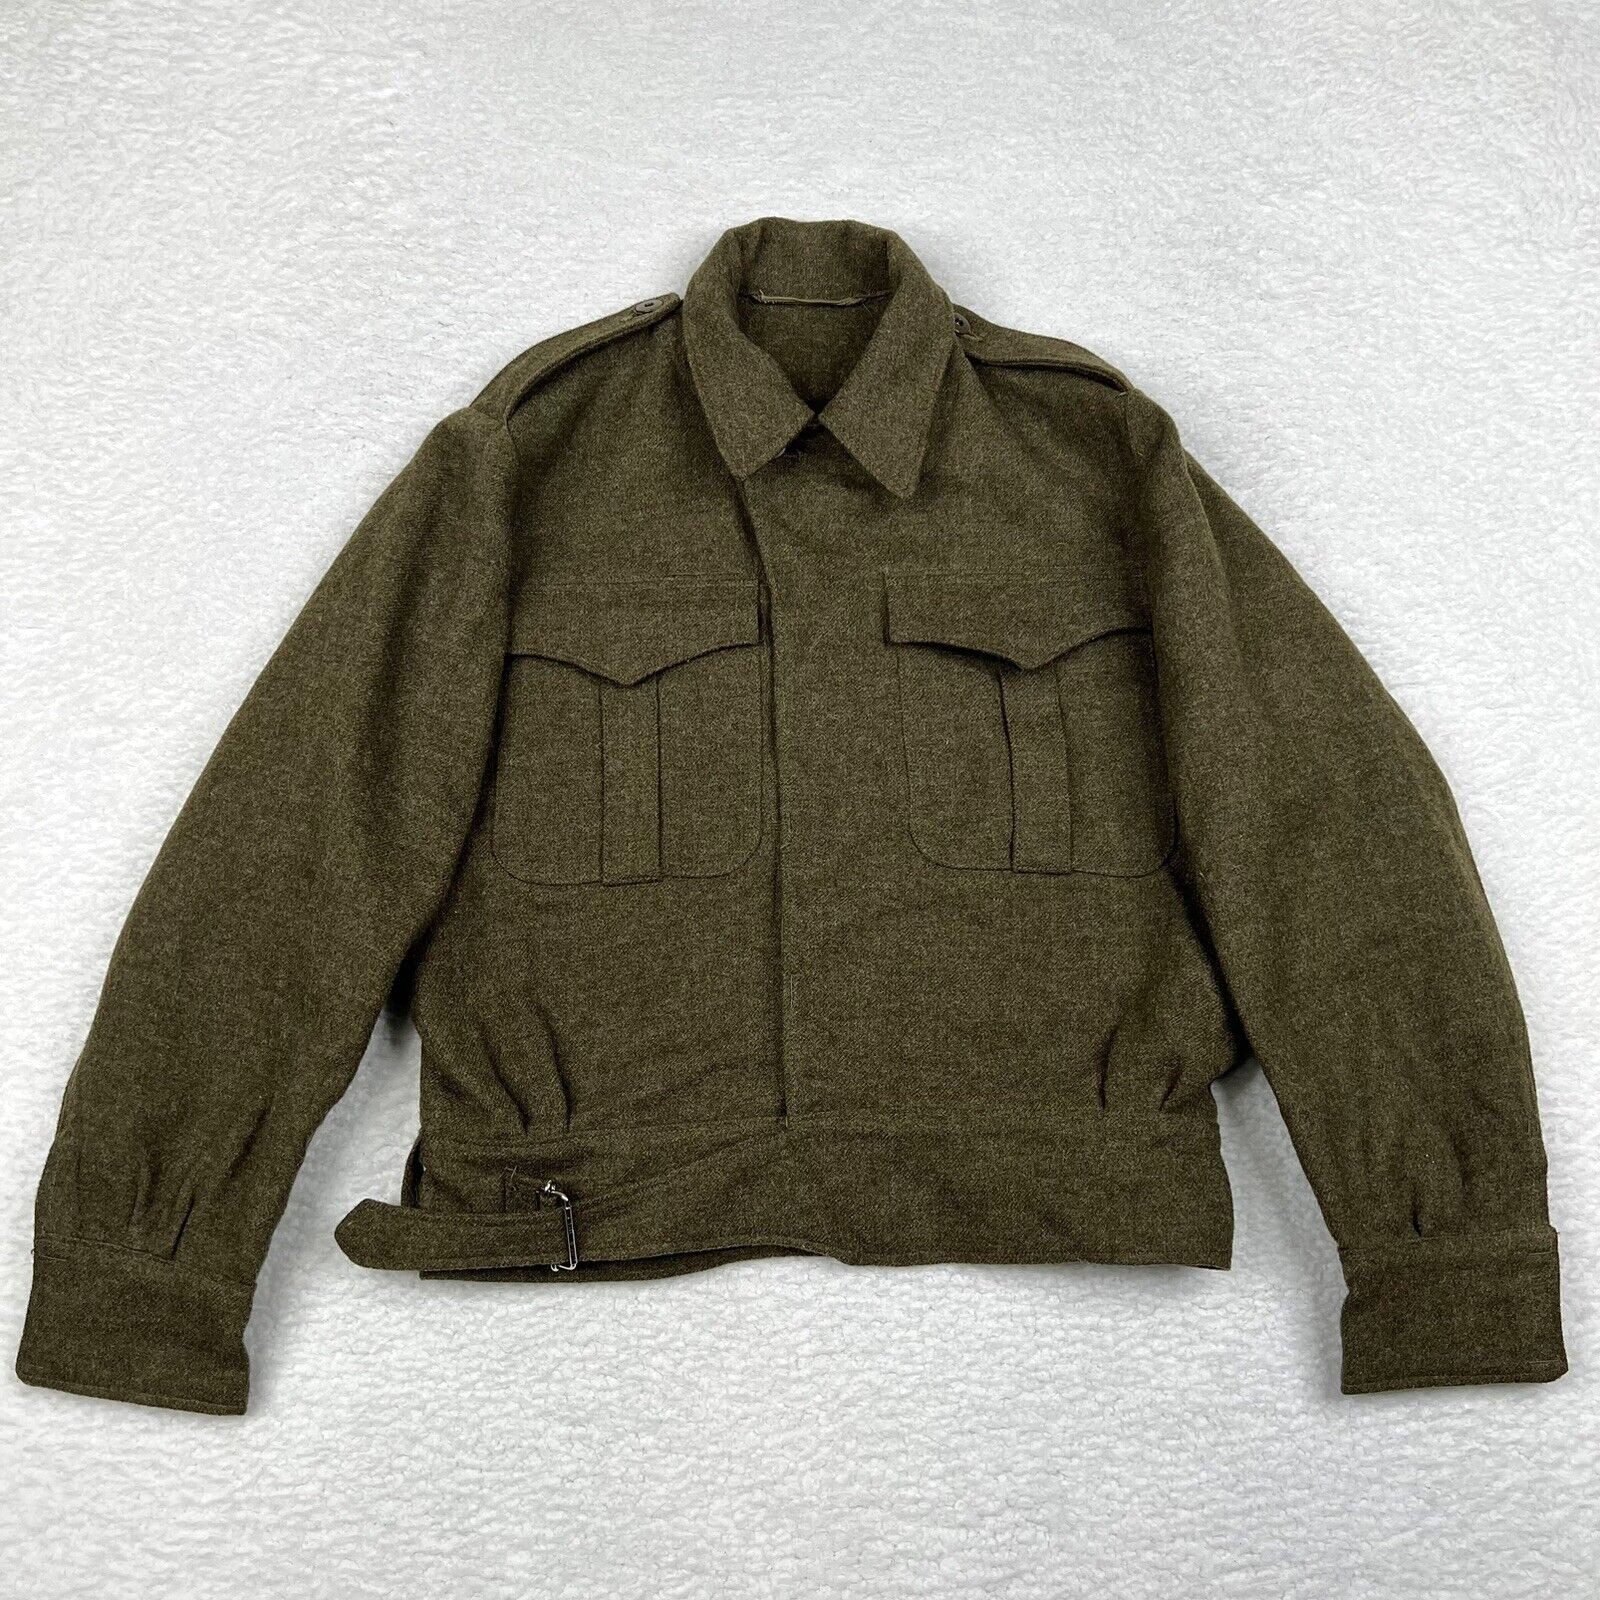 VTG Military Jacket 6 Green Canadian Battledress Coppley Noyes Randall 50s Wool